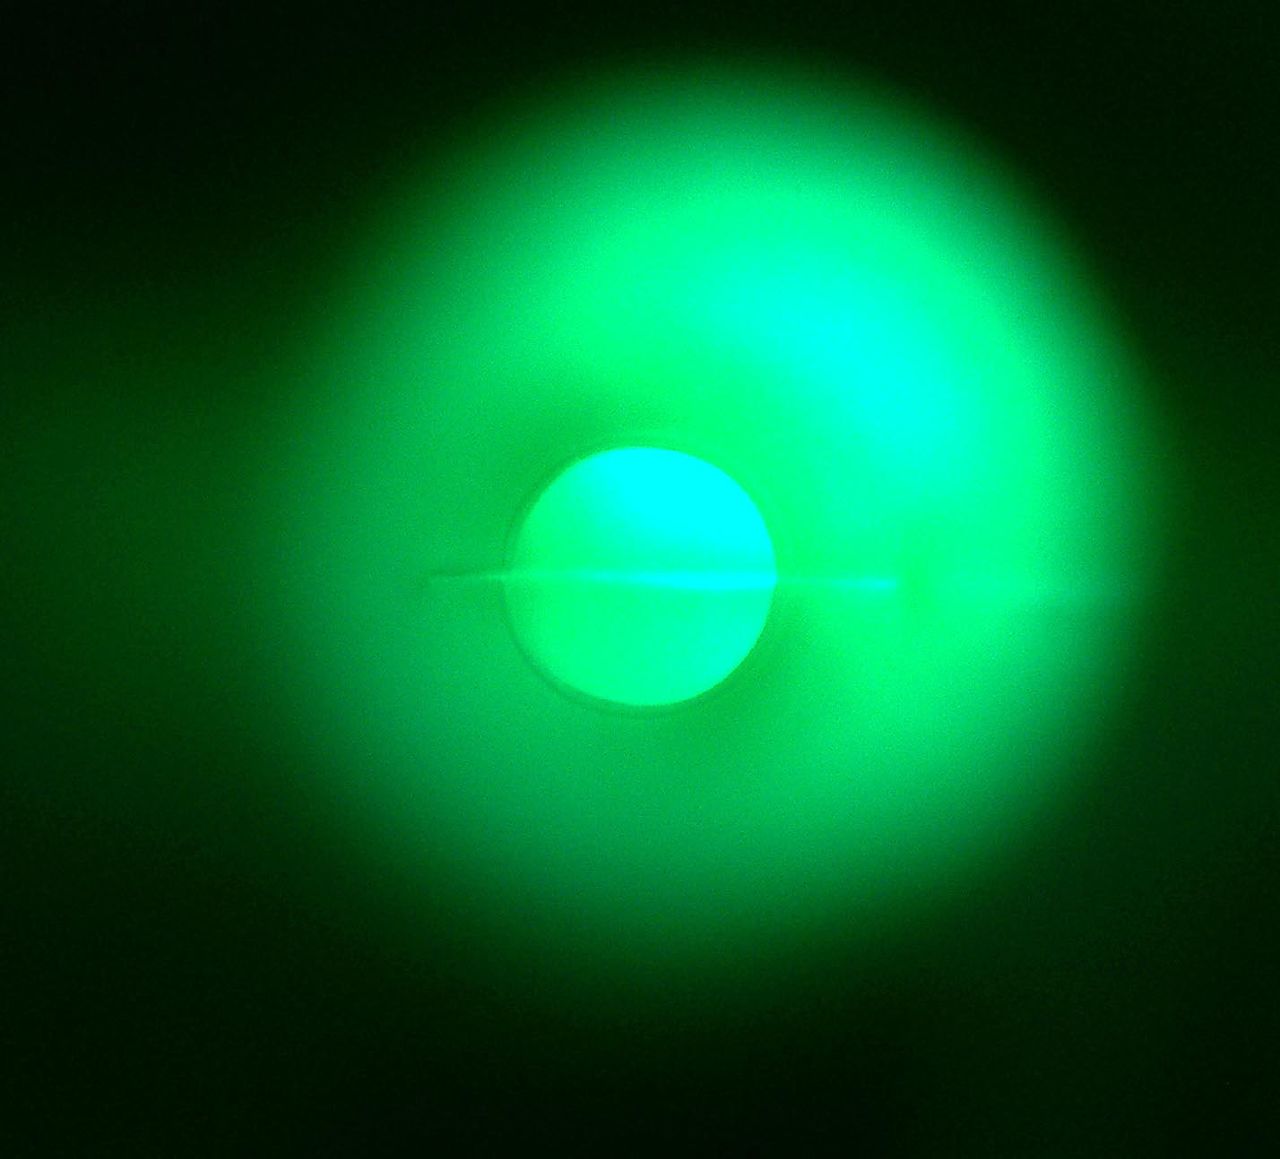 a green light emitting a green circle